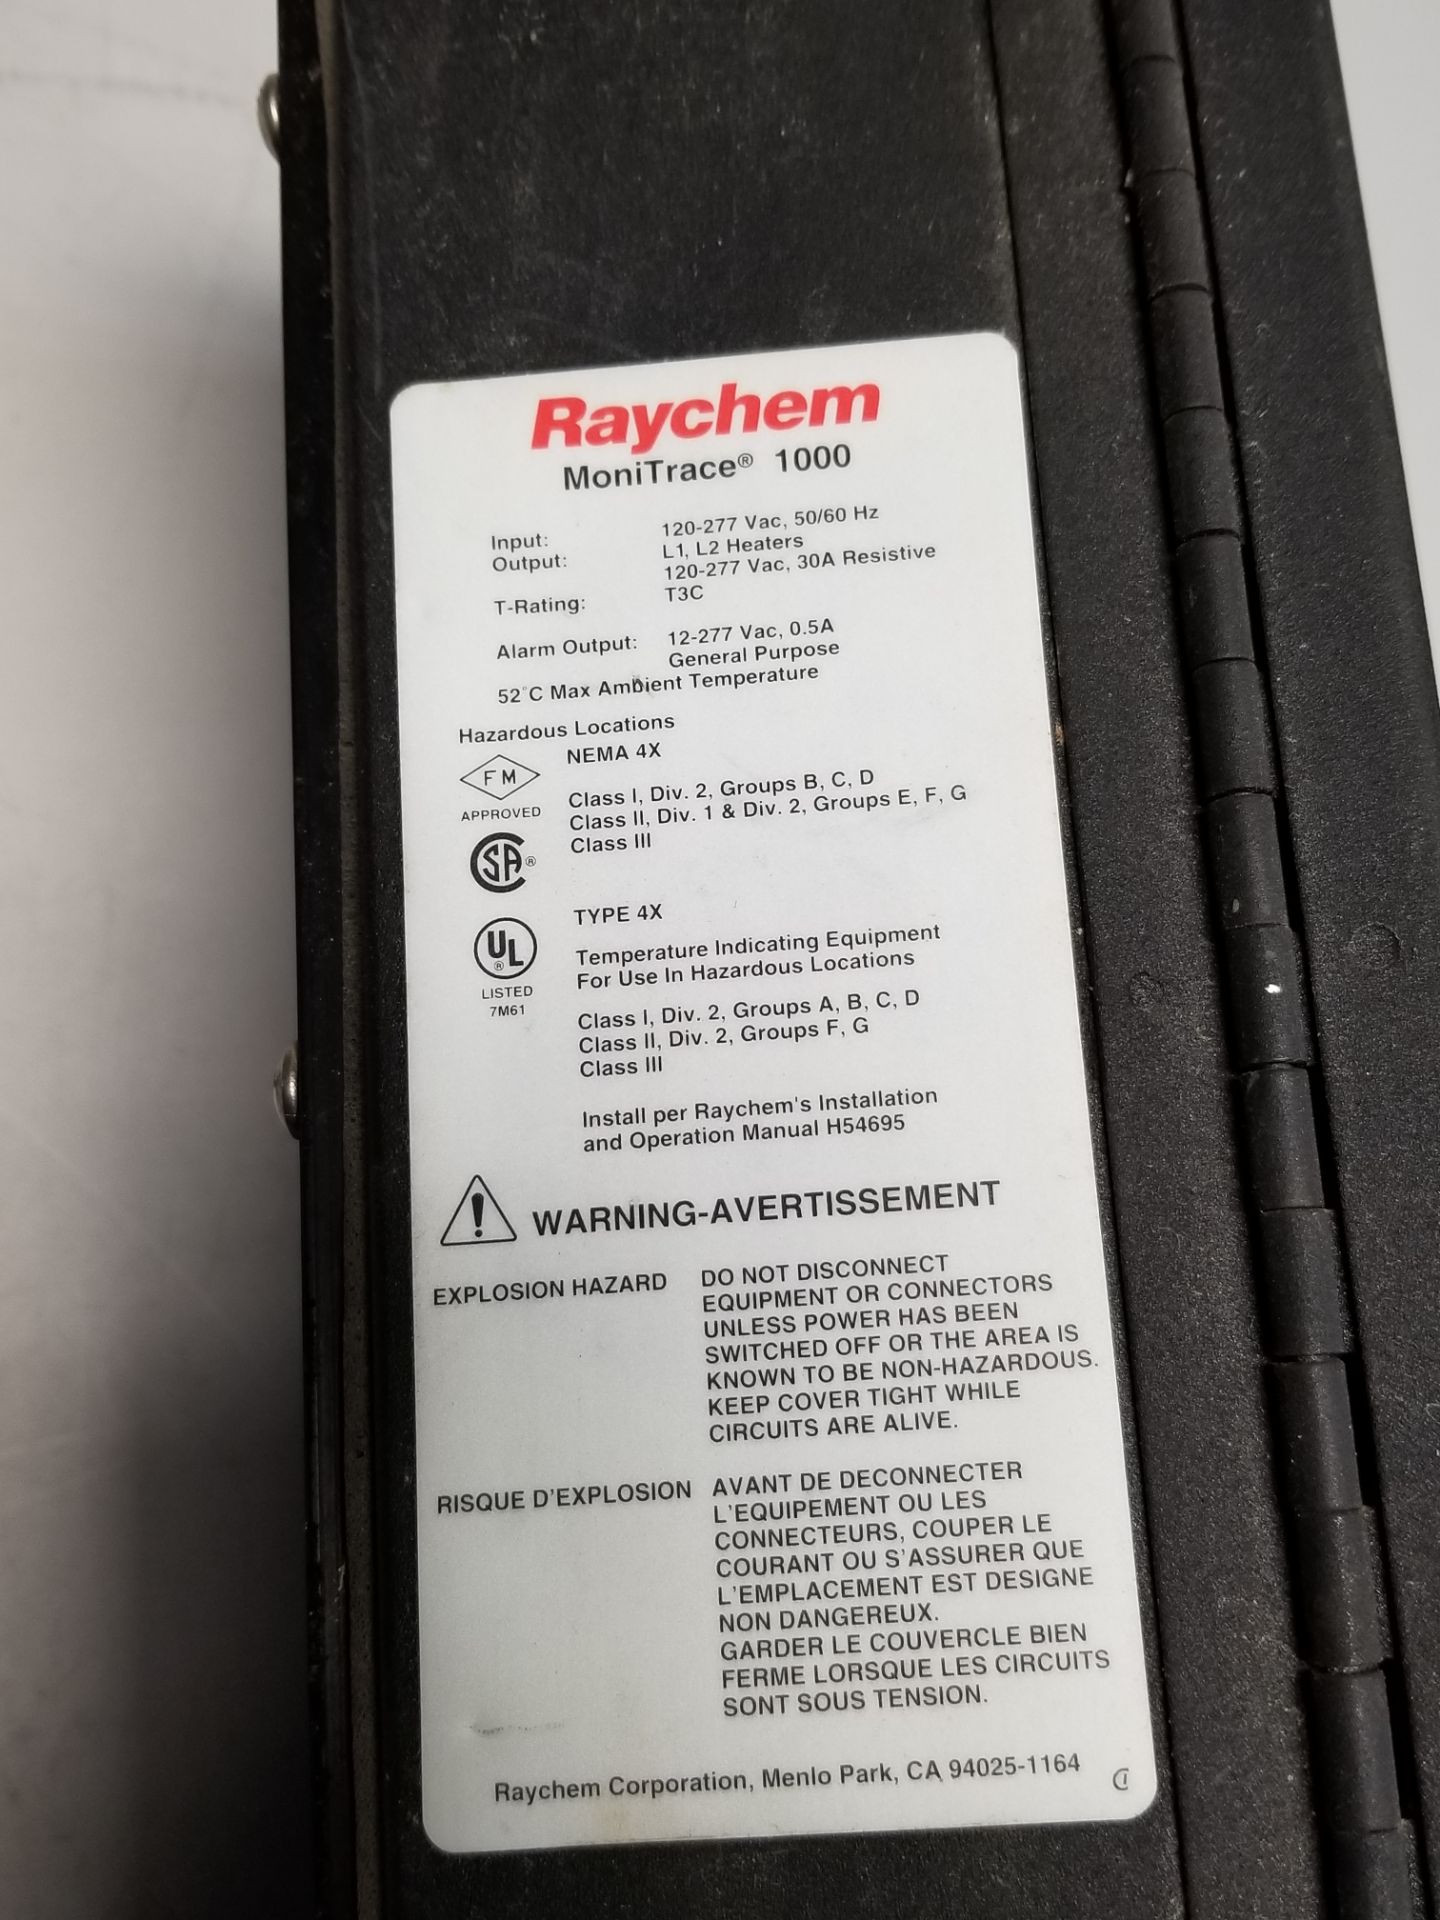 Raychem Monitrace 1000 Heat Tracing Controller Operator Interface - Image 4 of 4